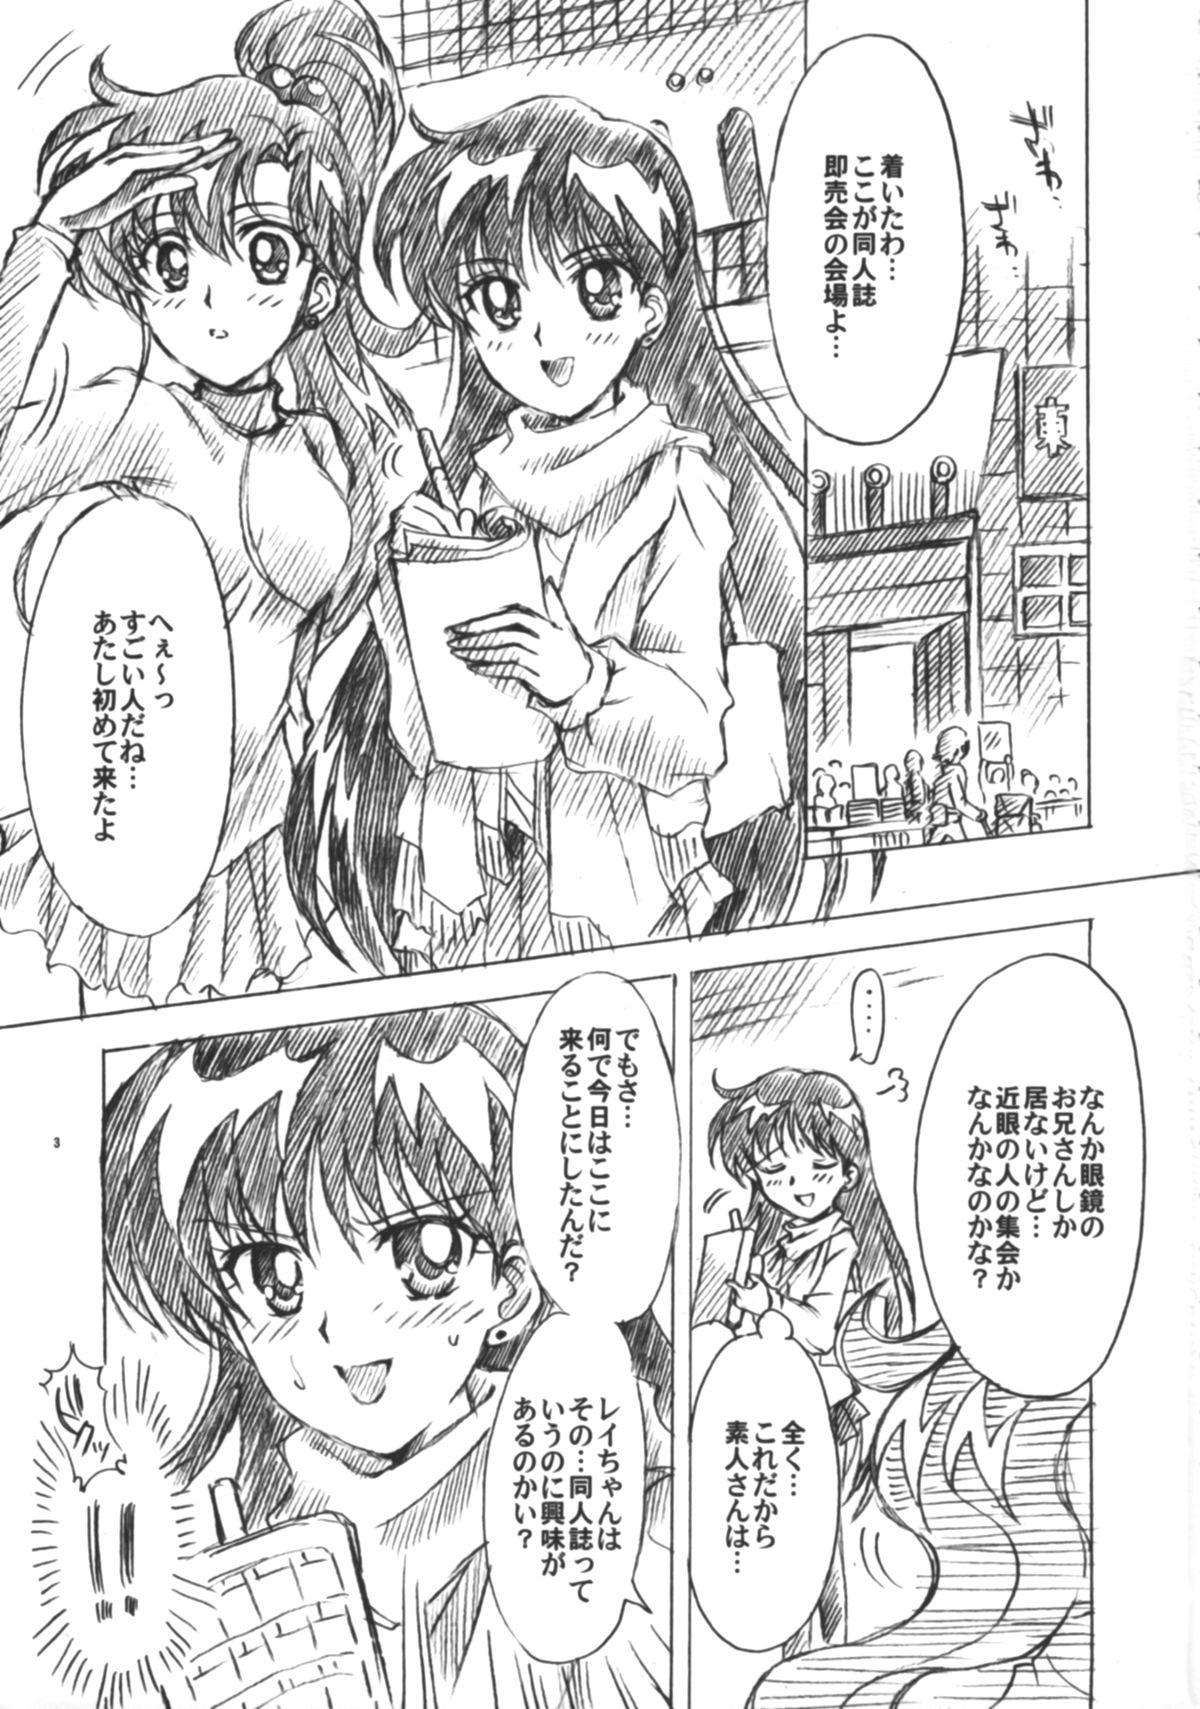 Bucetuda Boku no Kanojo wa Sailor Senshi 6 - Sailor moon Shorts - Page 4